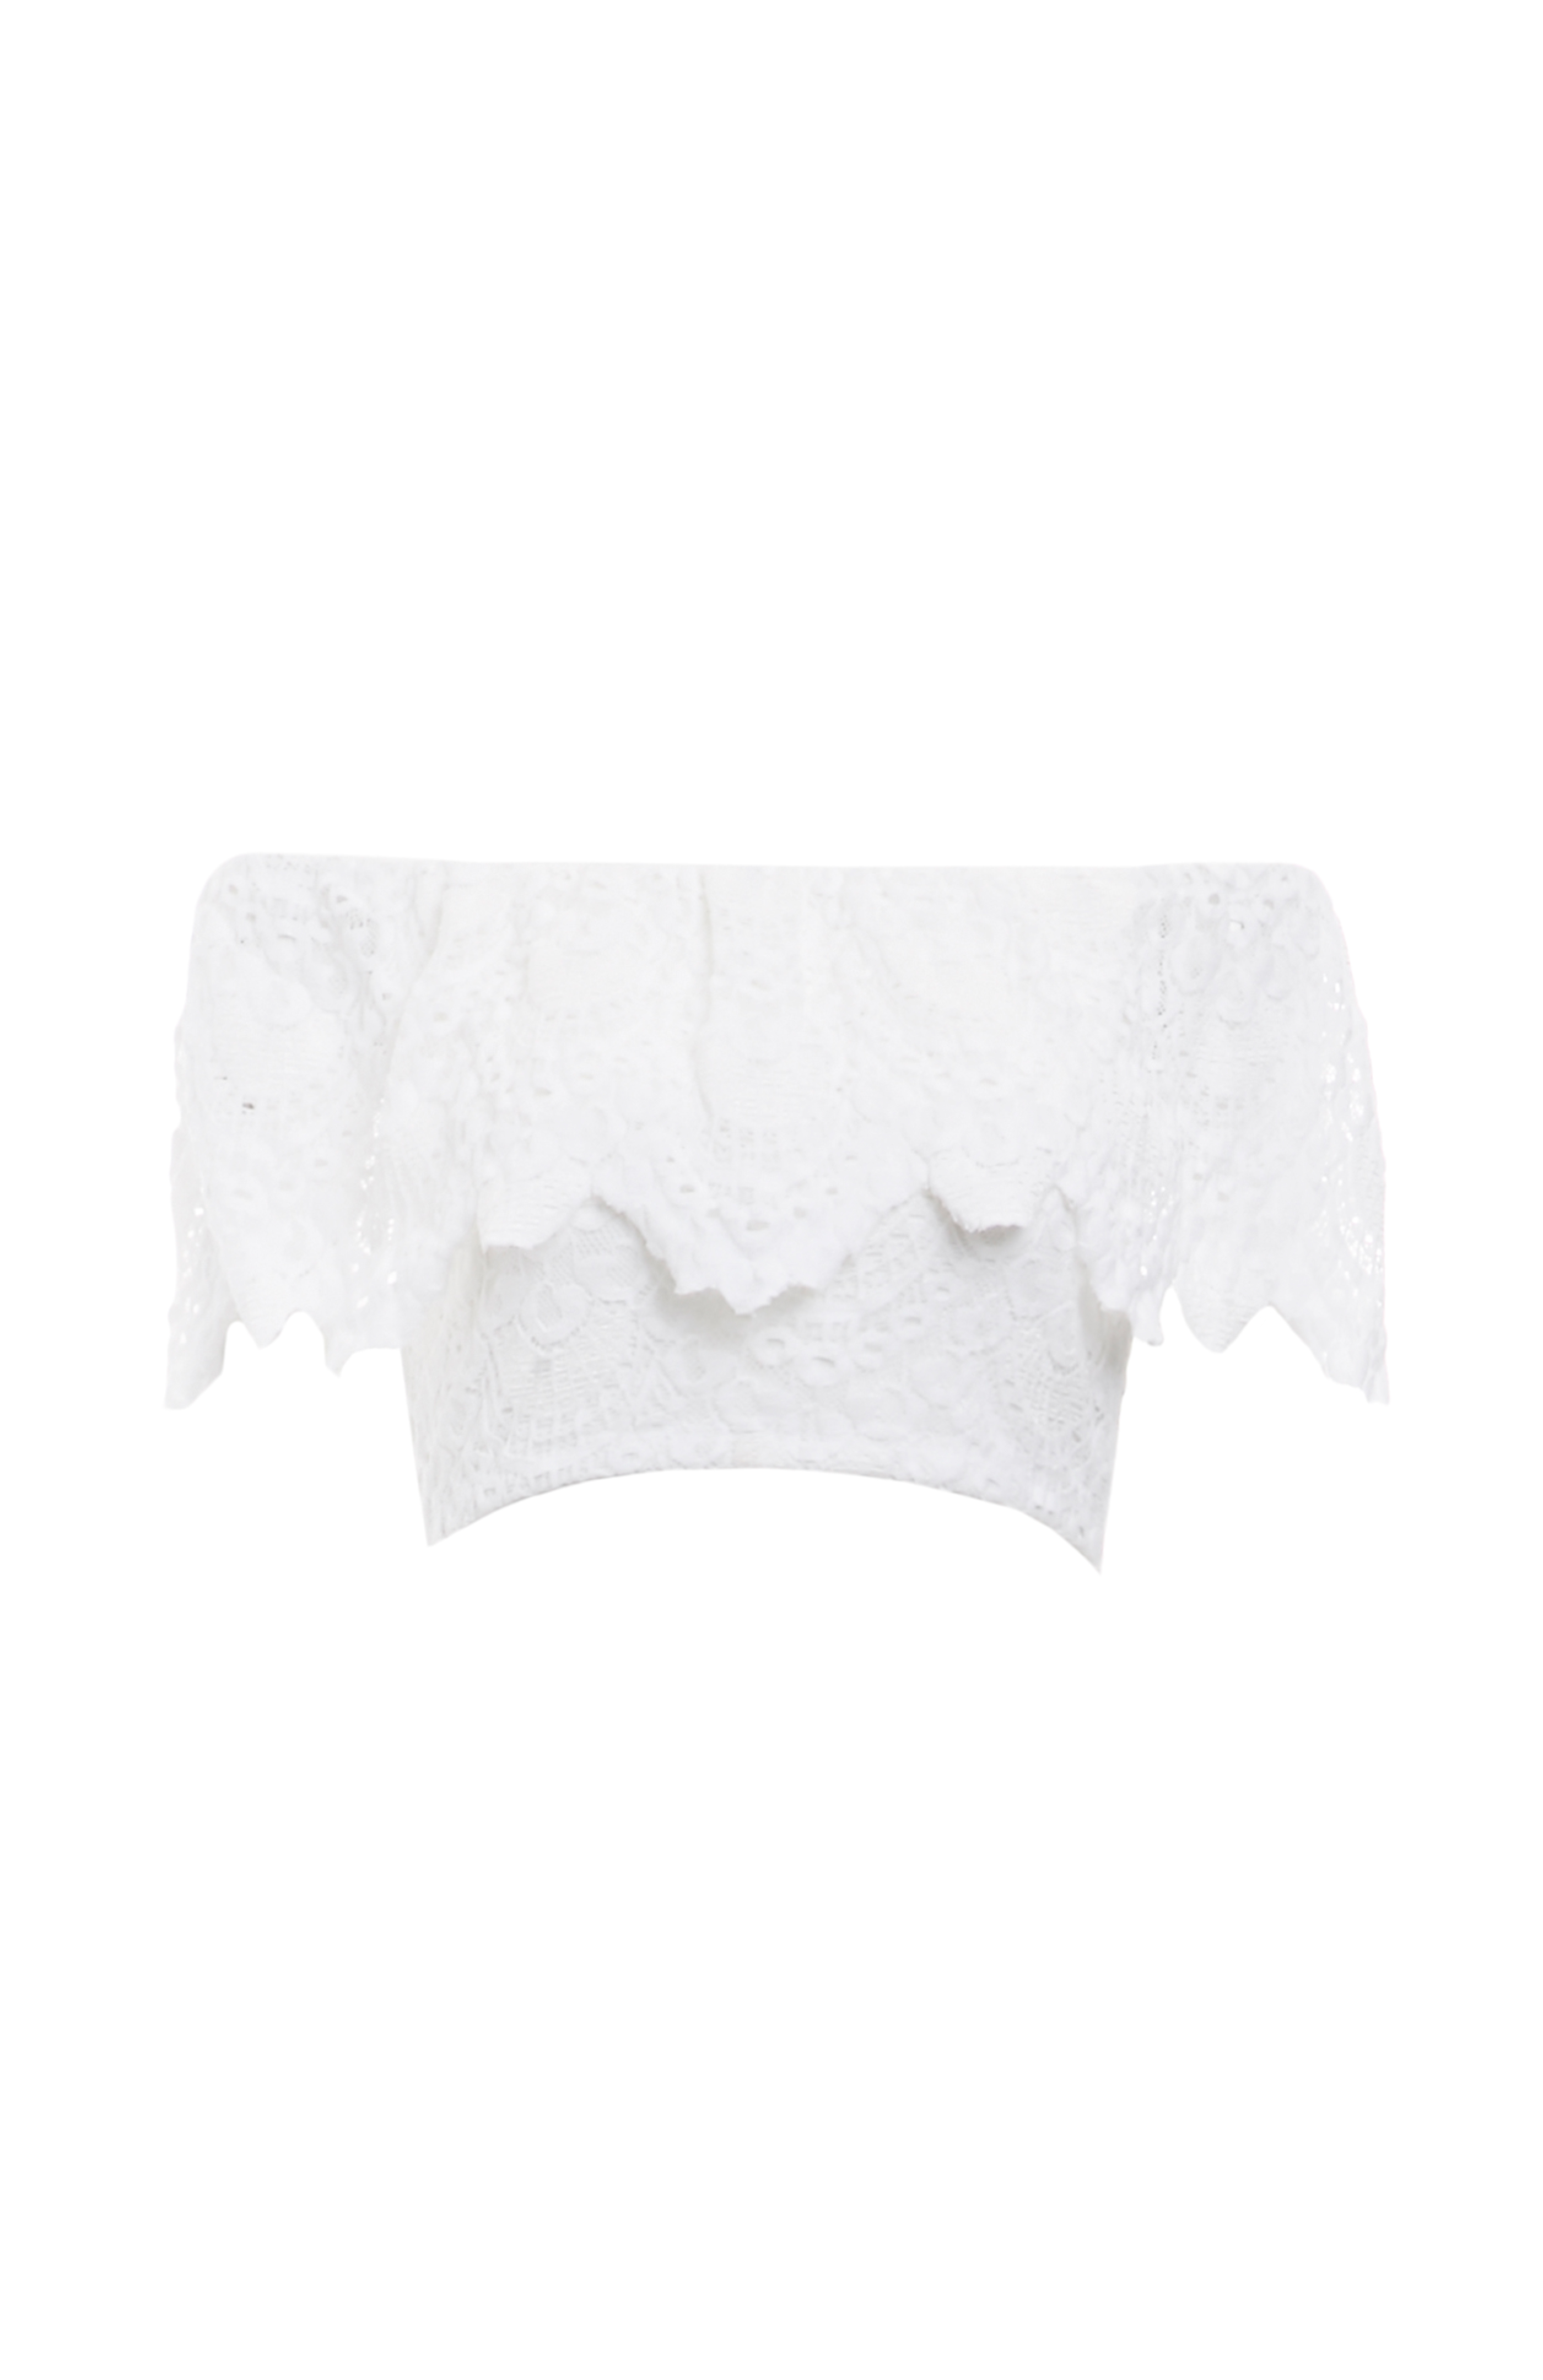 Nightcap Spanish Lace Crop Top in White | DAILYLOOK